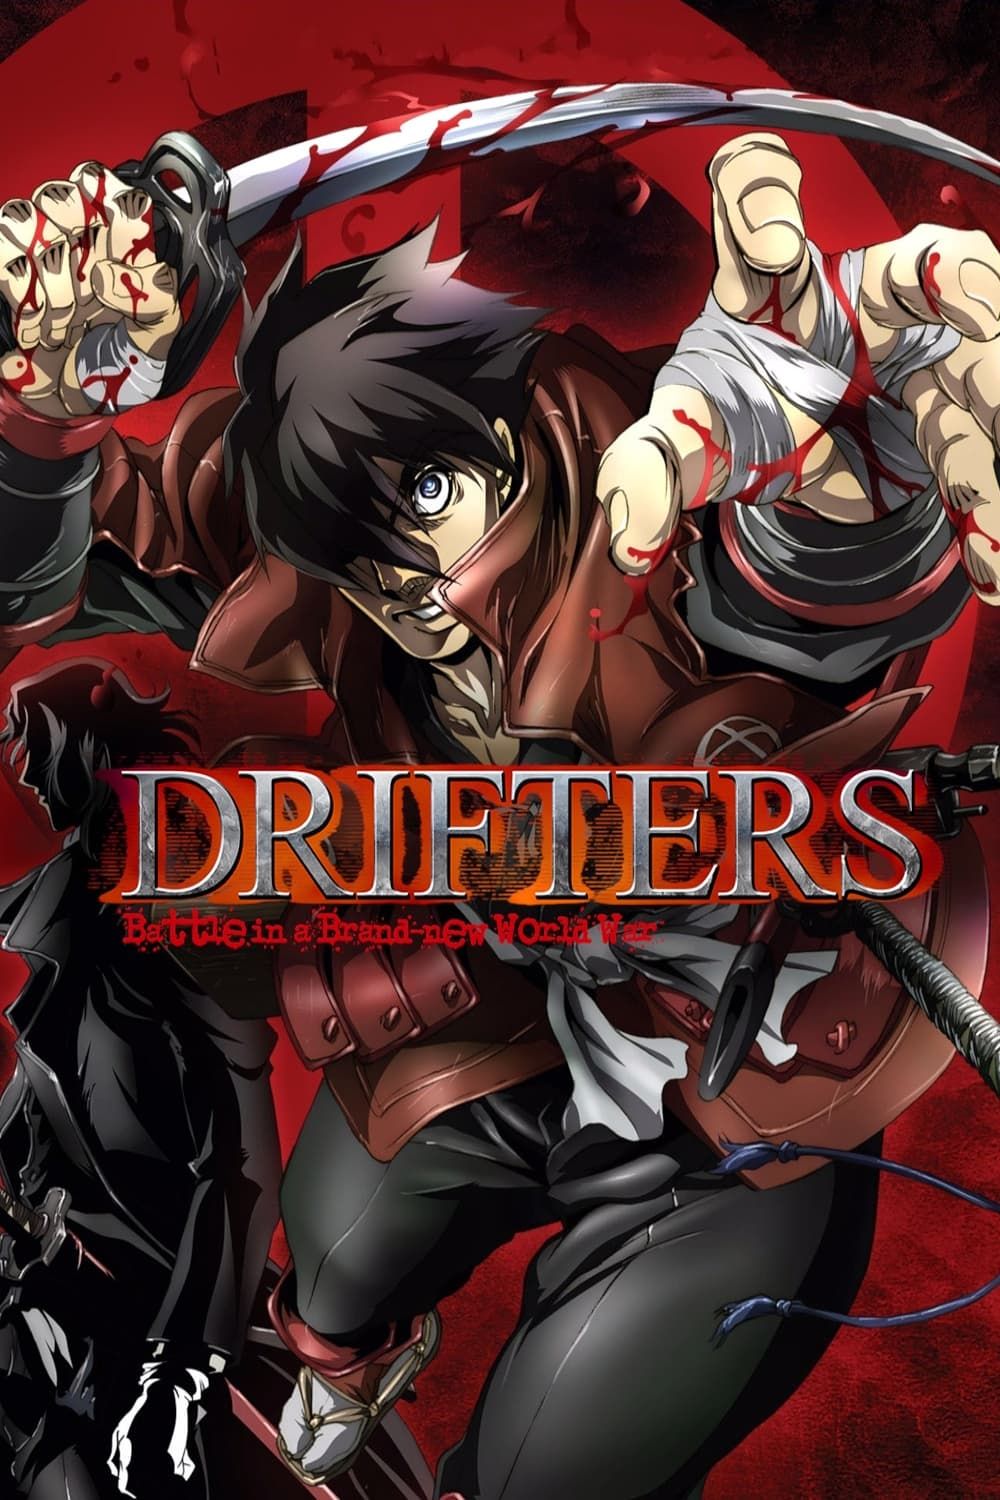 Drifters (TV) (Sub) Original Copyright